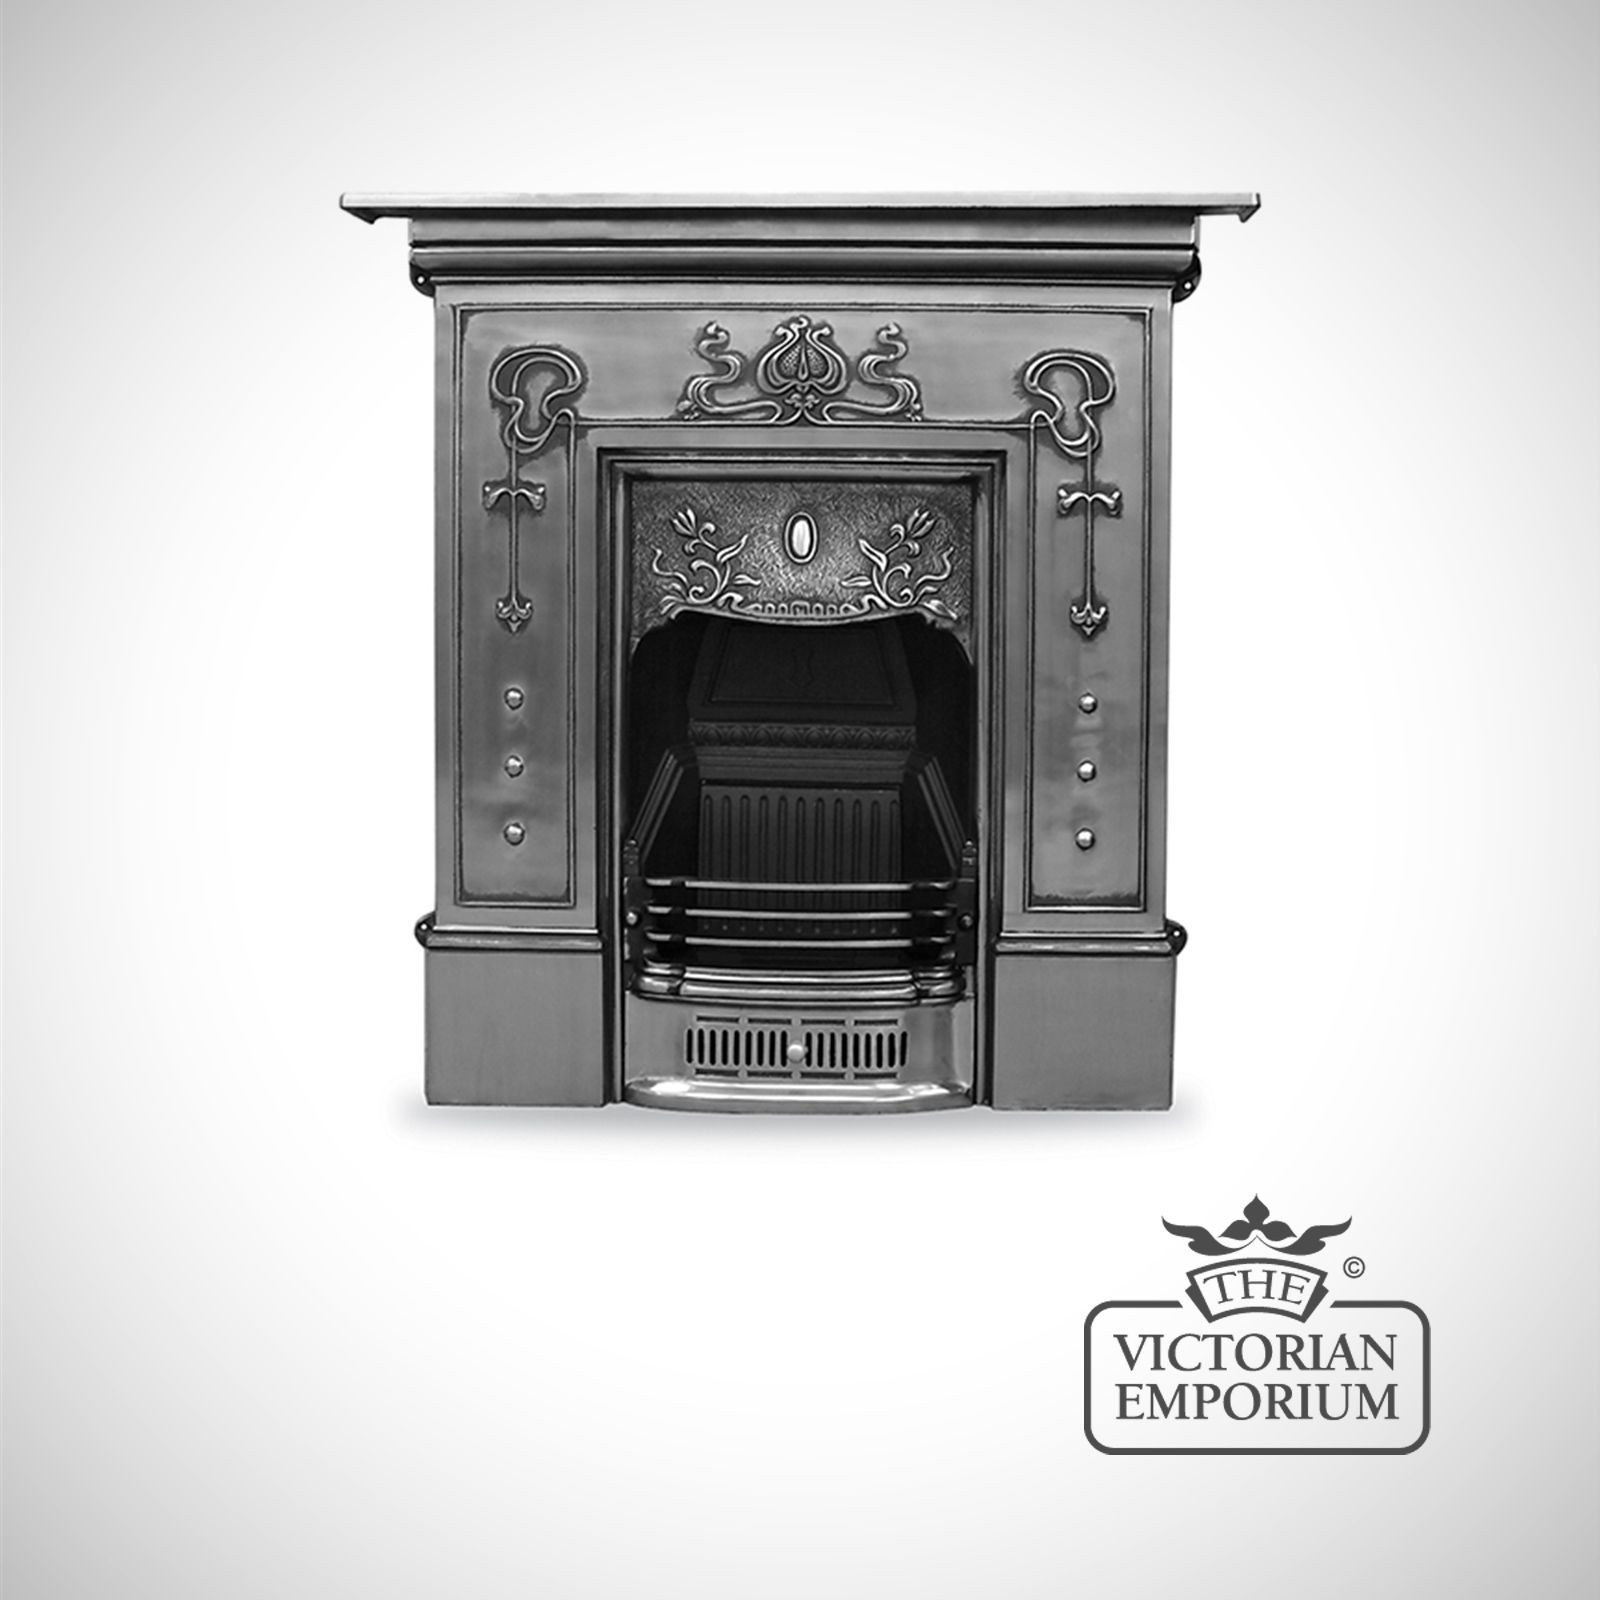 Pretty Art Nouveau style cast iron fireplace with botanical details